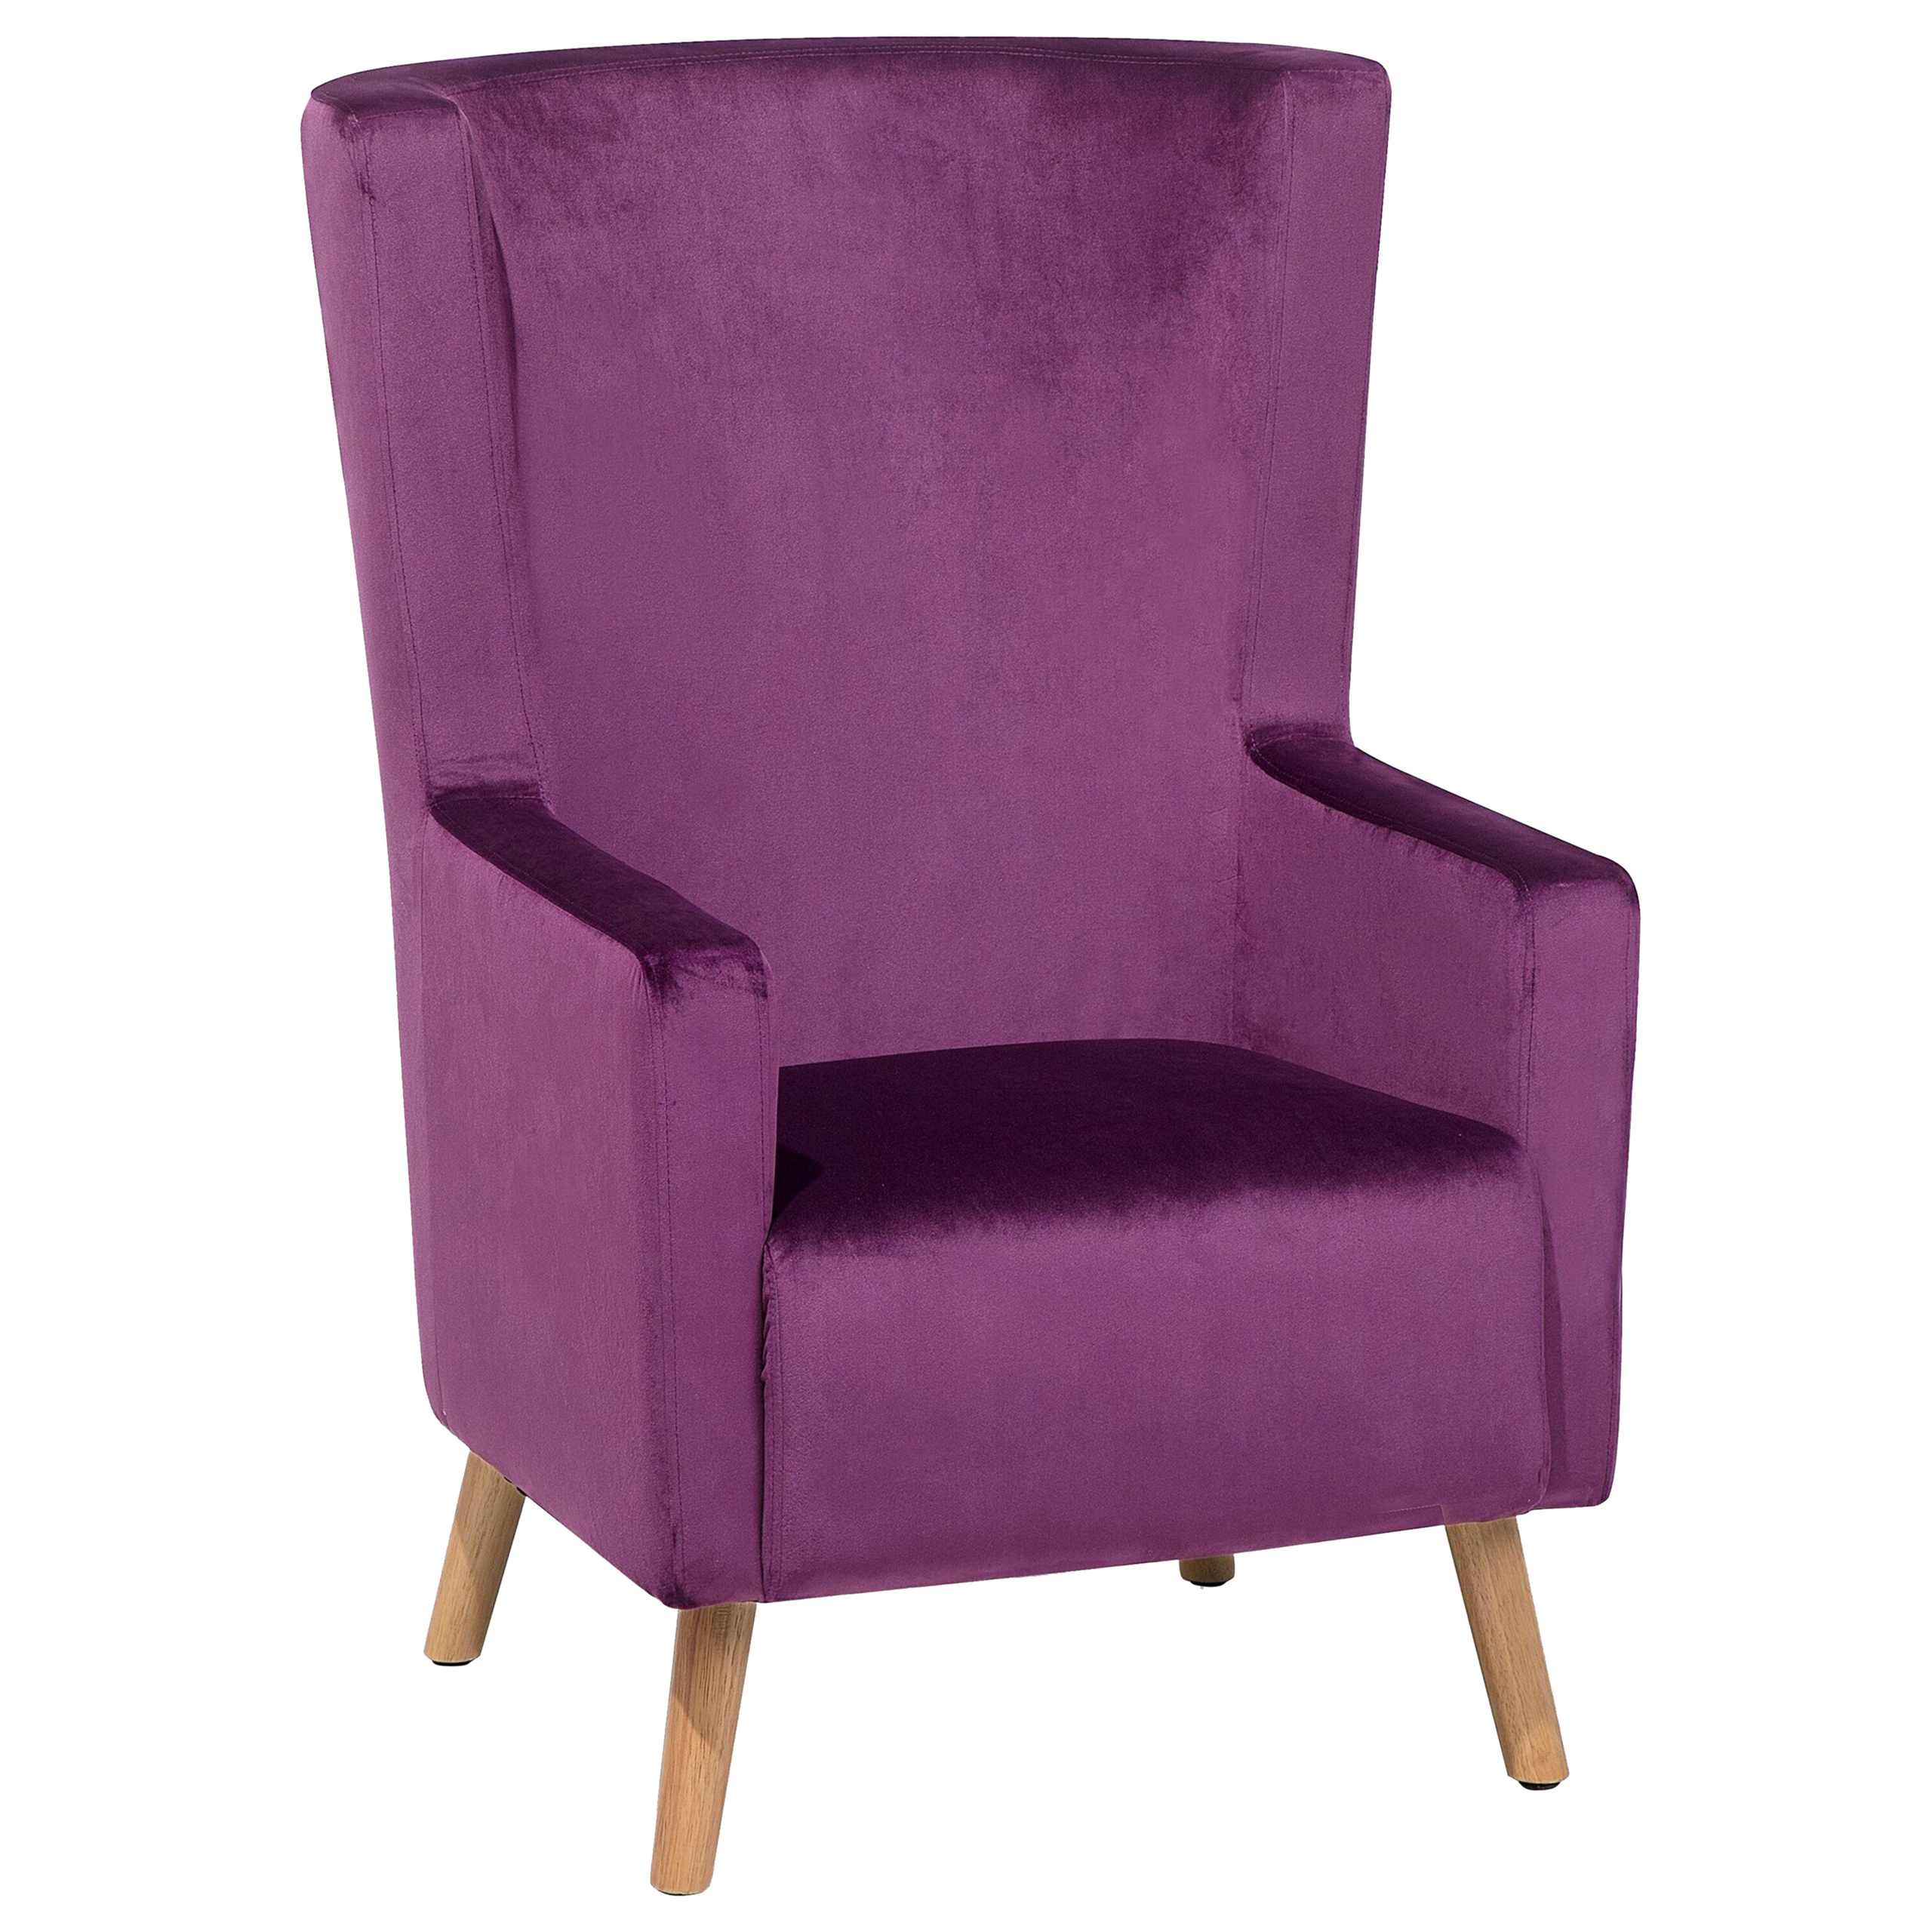 Beliani Wingback Chair Pink Purple Upholstery High Back Wooden Legs